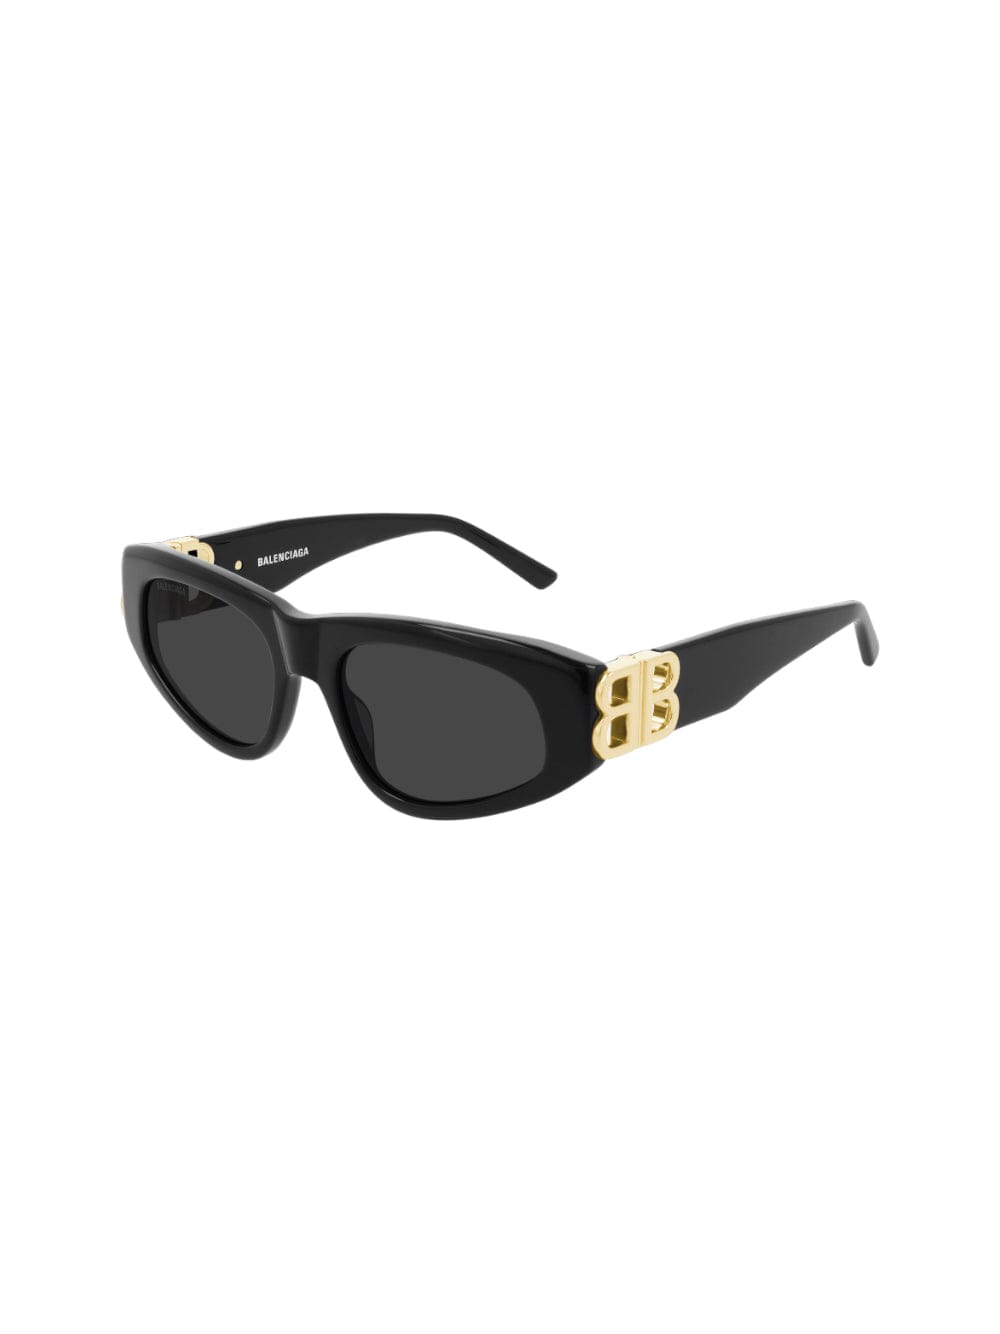 Balenciaga Bb0095 - Black Sunglasses